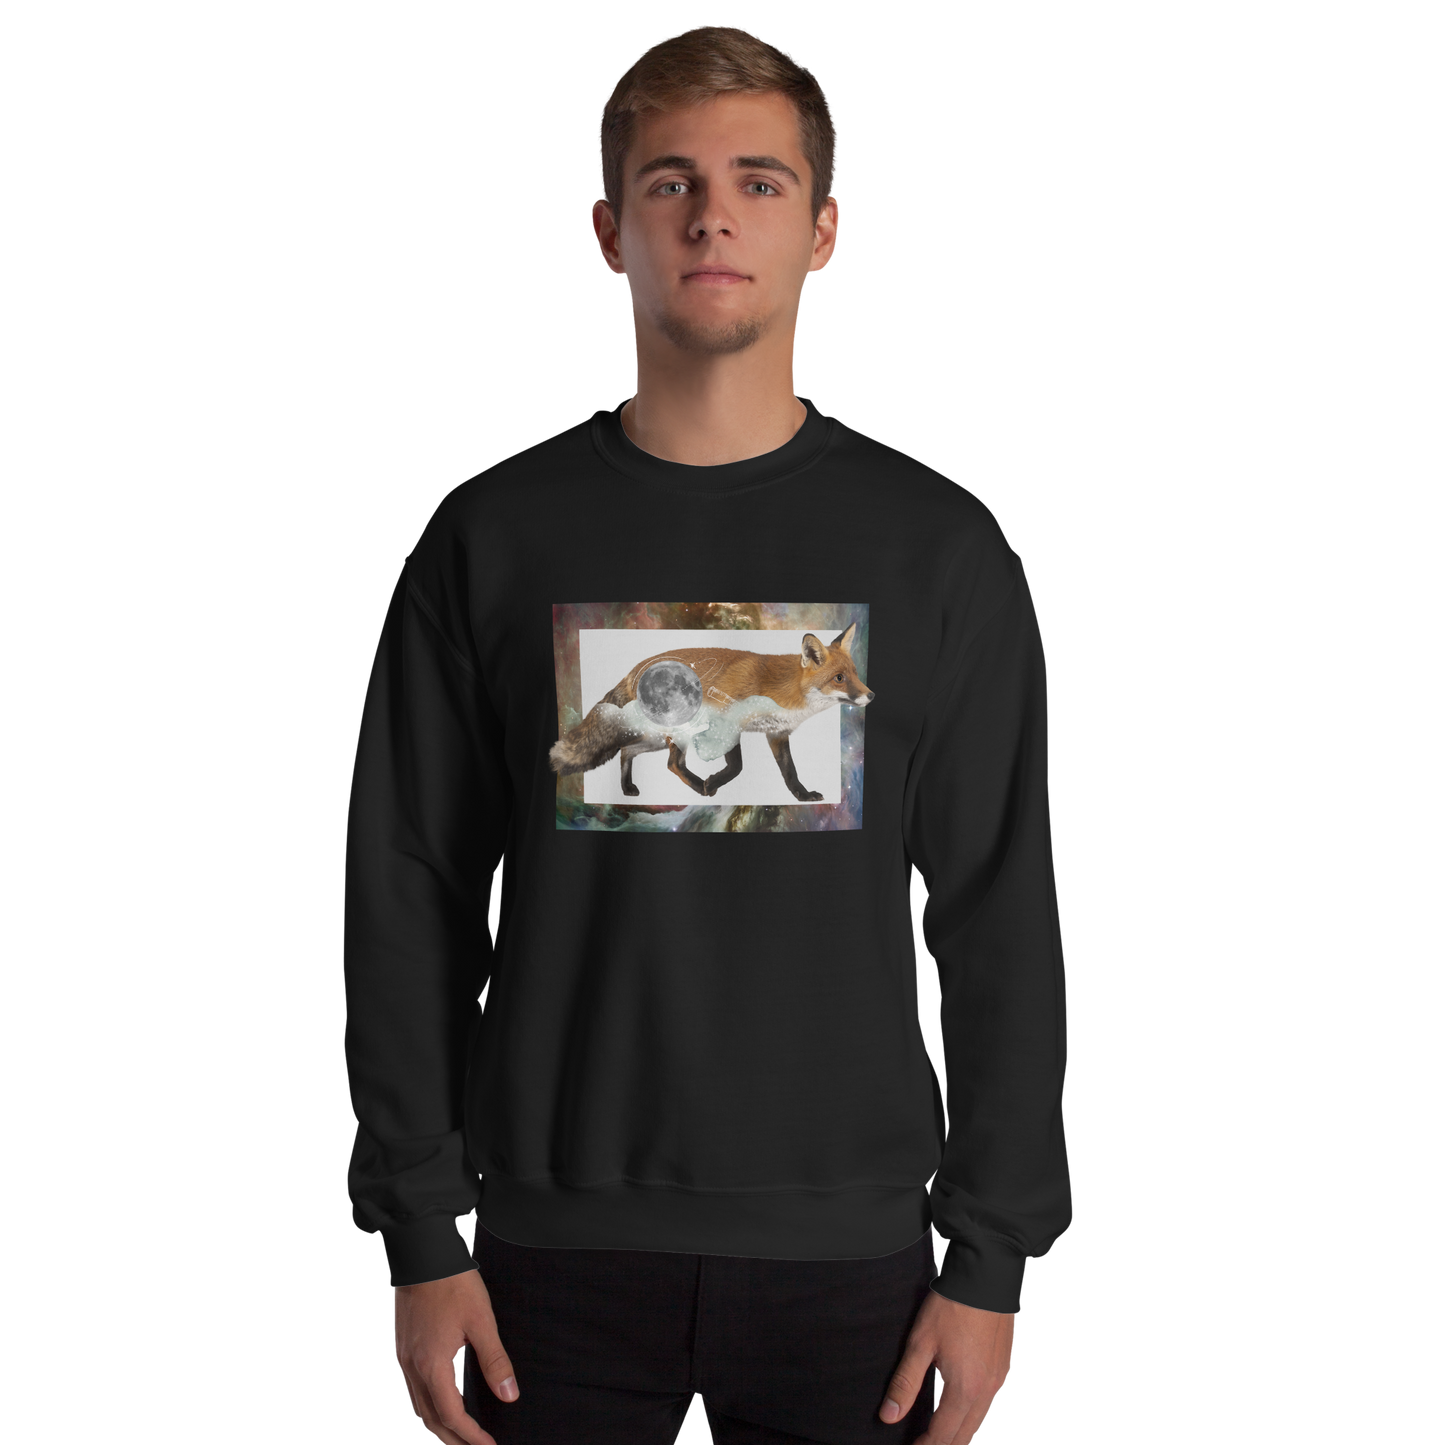 Man wearing a Black Fox Sweatshirt featuring an eye-catching Space Fox graphic on the chest - Cool Graphic Fox Sweatshirts - Boozy Fox